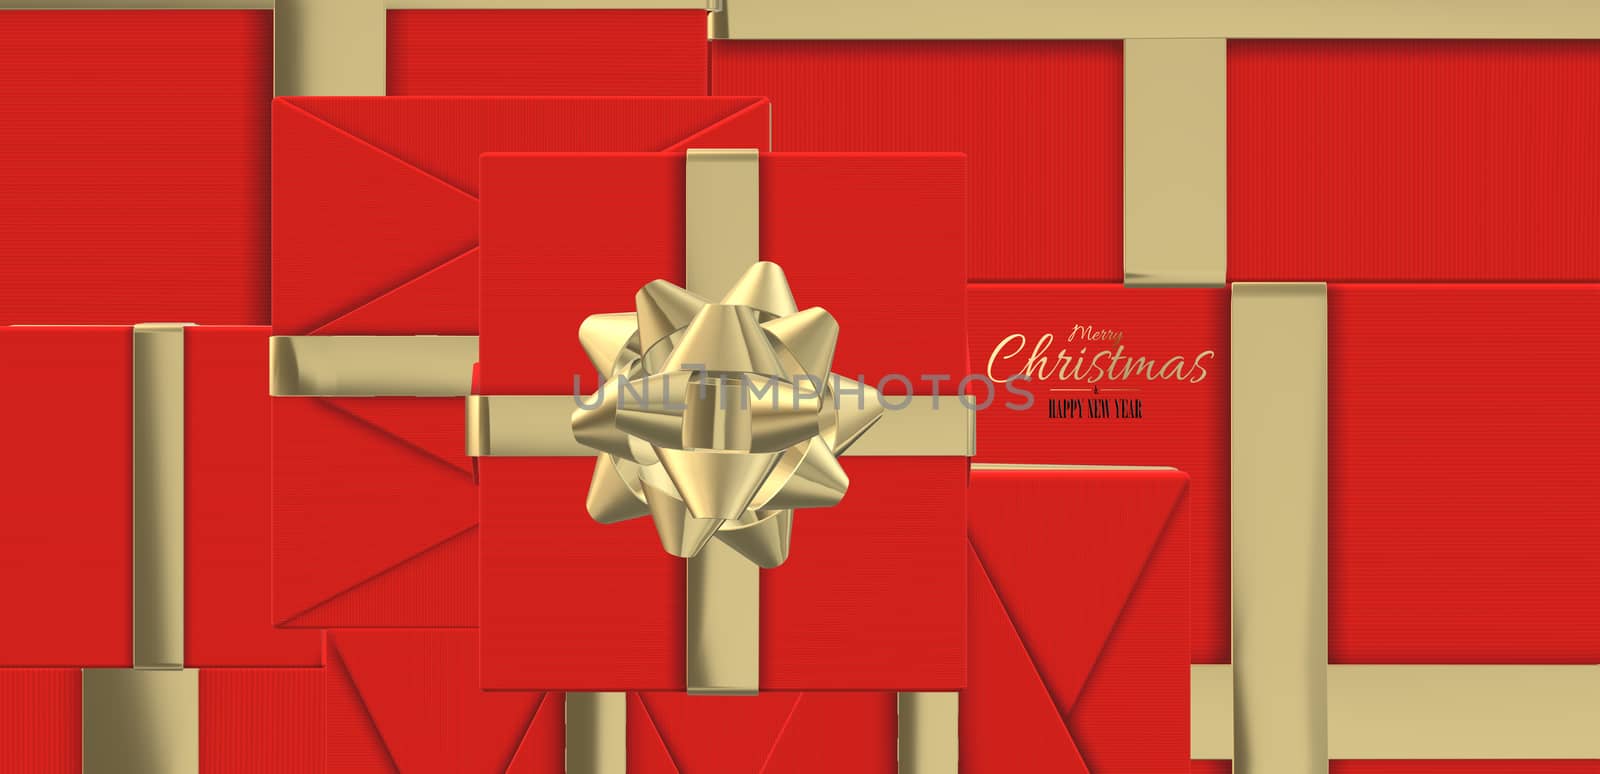 Christmas luxury design by NelliPolk